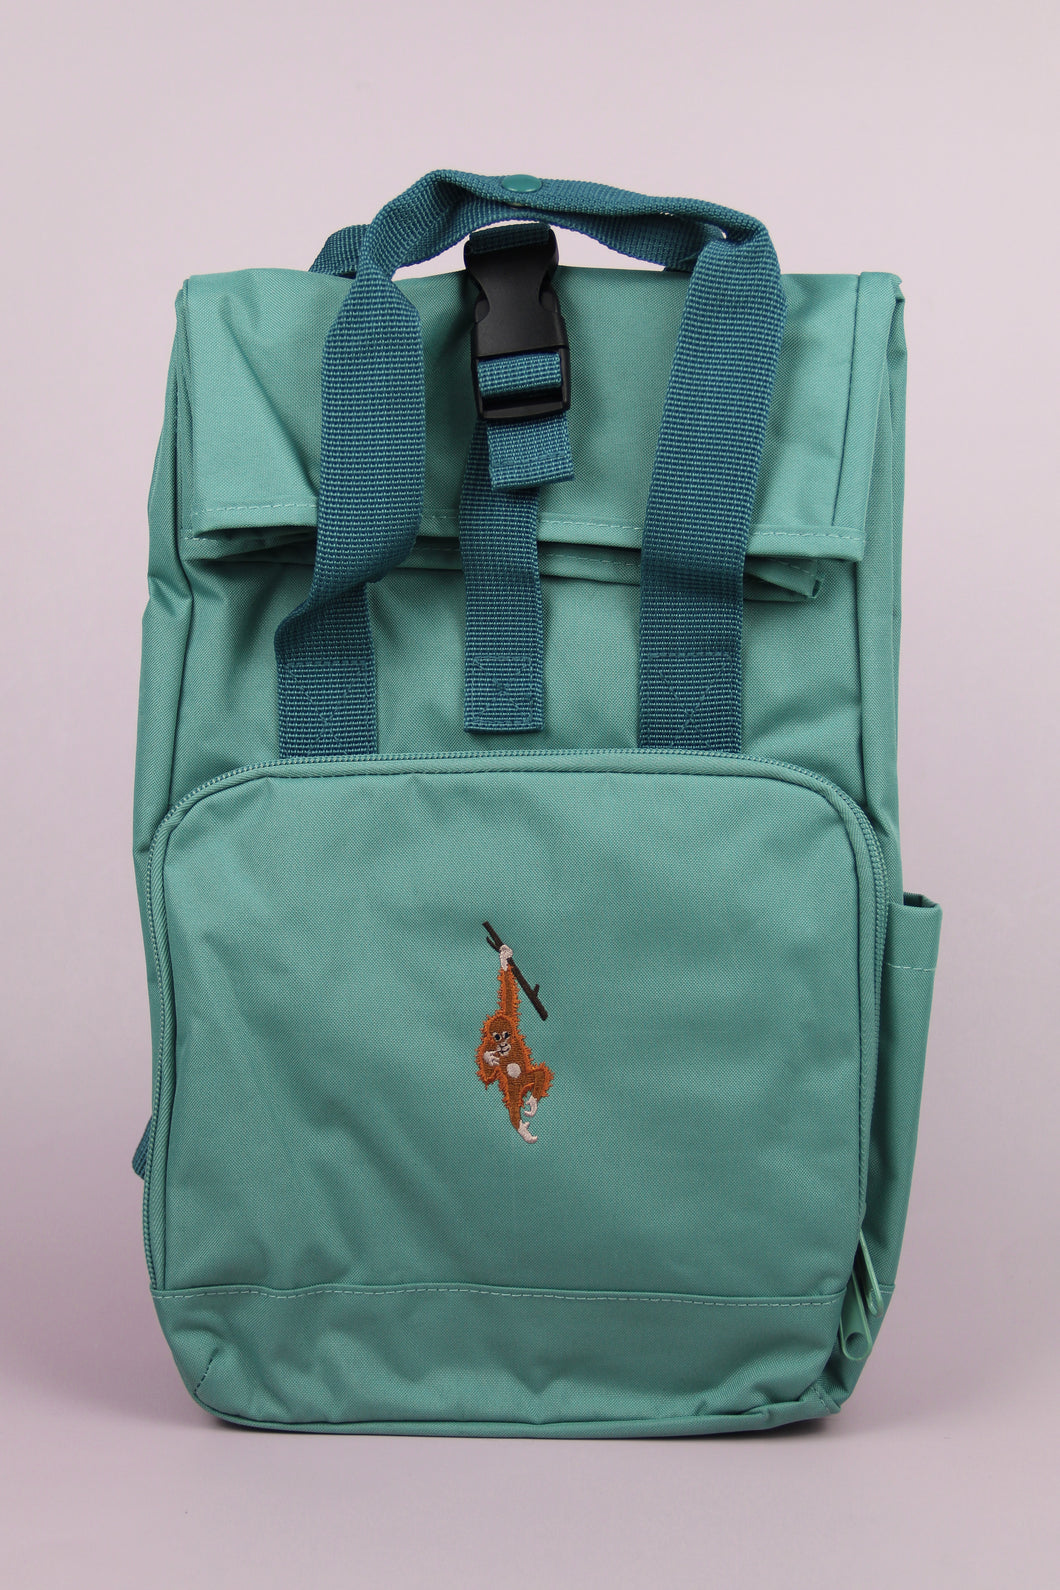 Orangutan Recycled Backpack - Sage